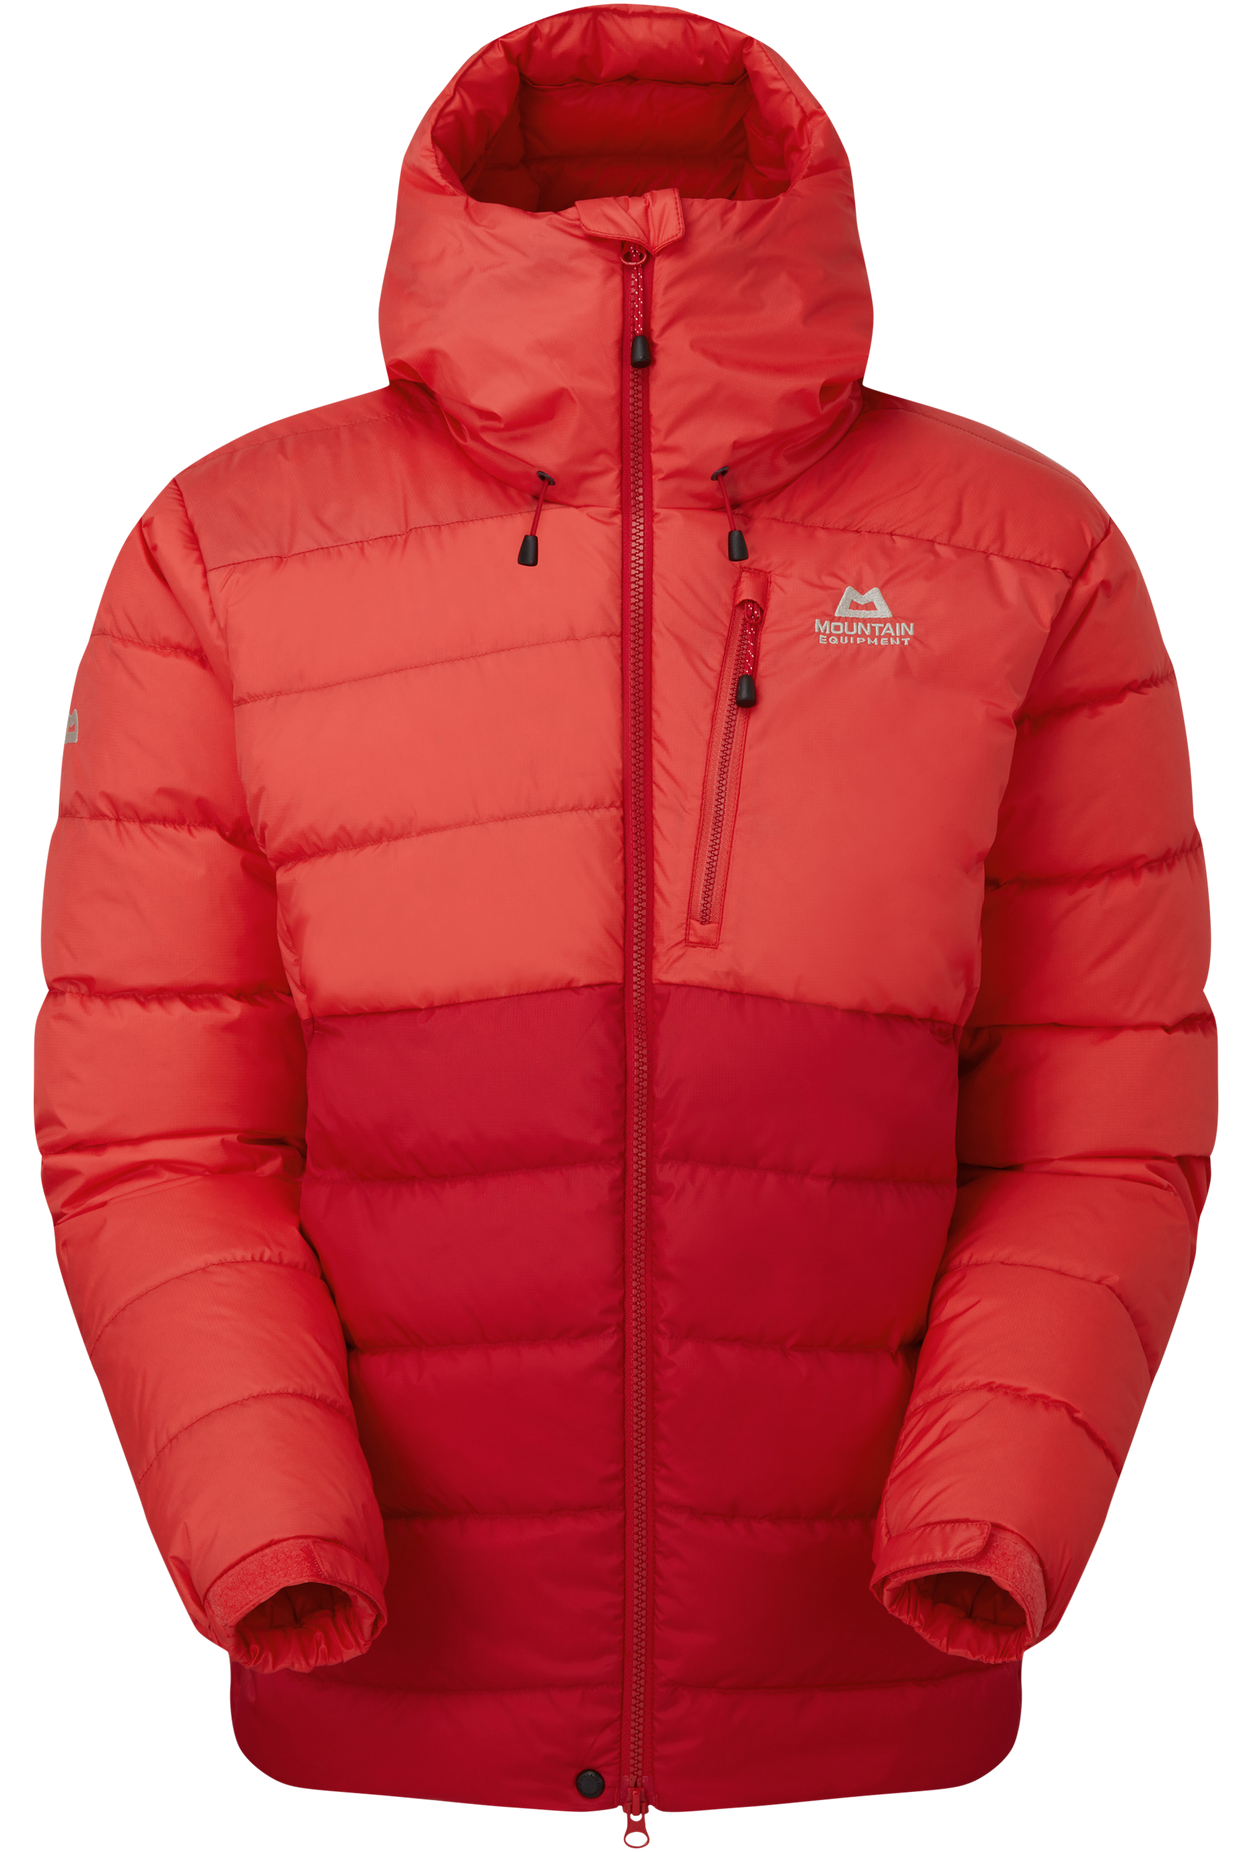 Mountain Equipment dámská péřová bunda Trango Wmns Jacket Barva: Capsicum/Pop Red, Velikost: 14/L